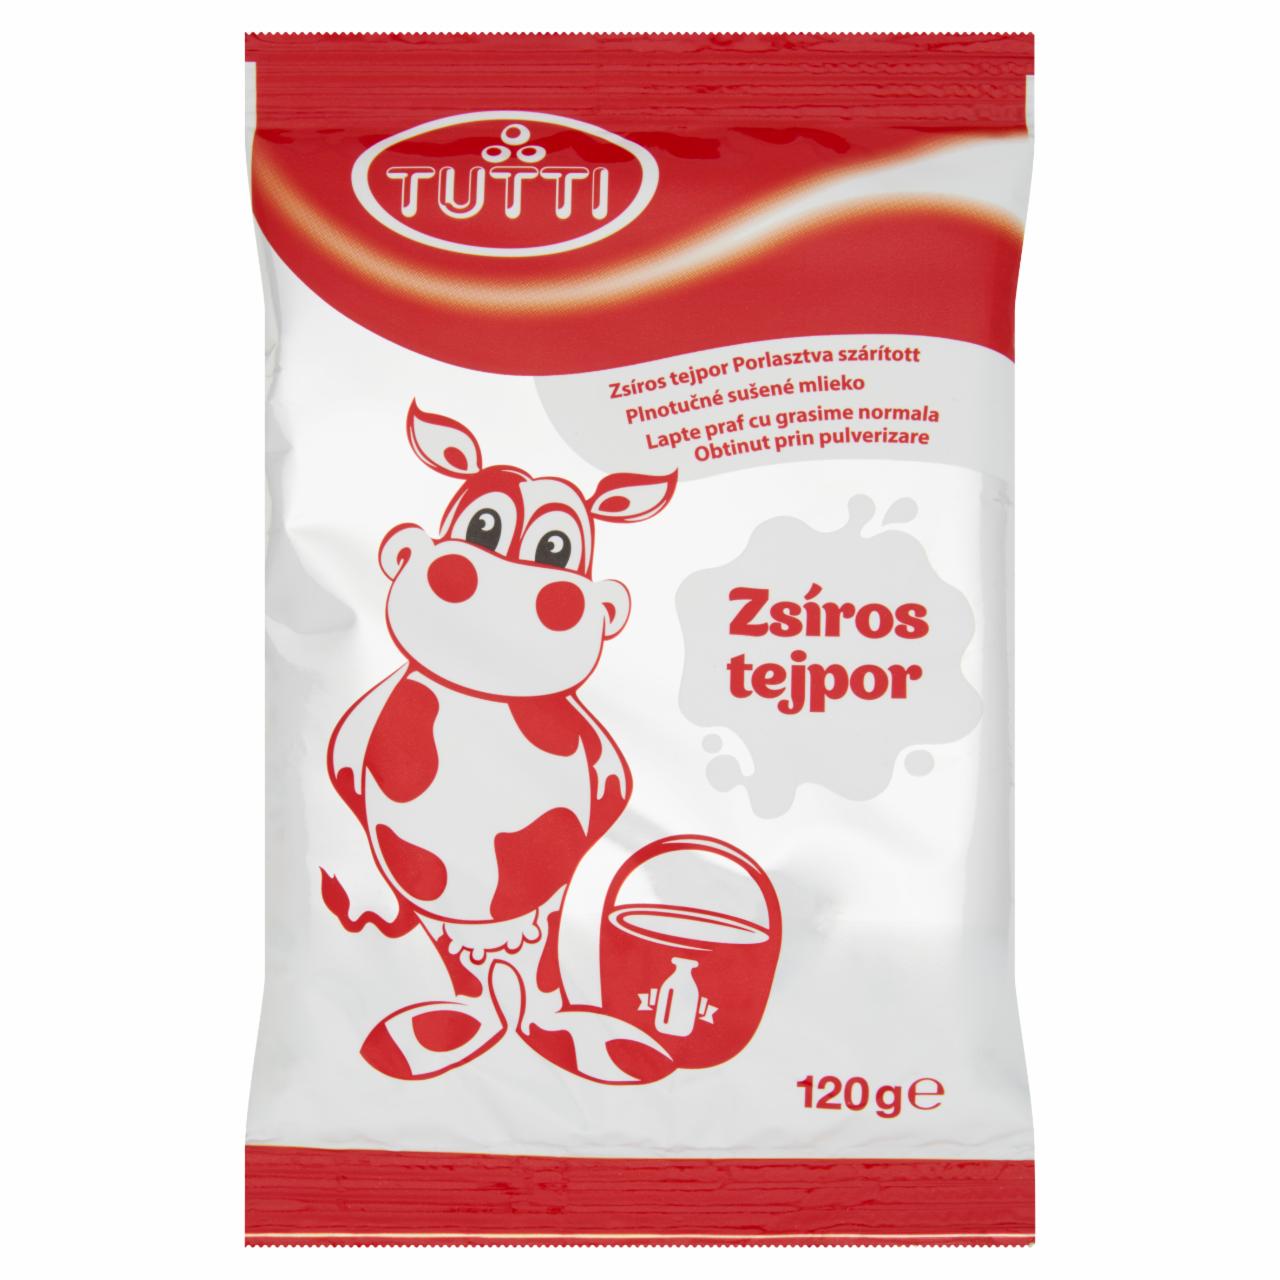 Képek - Tutti zsíros tejpor 120 g